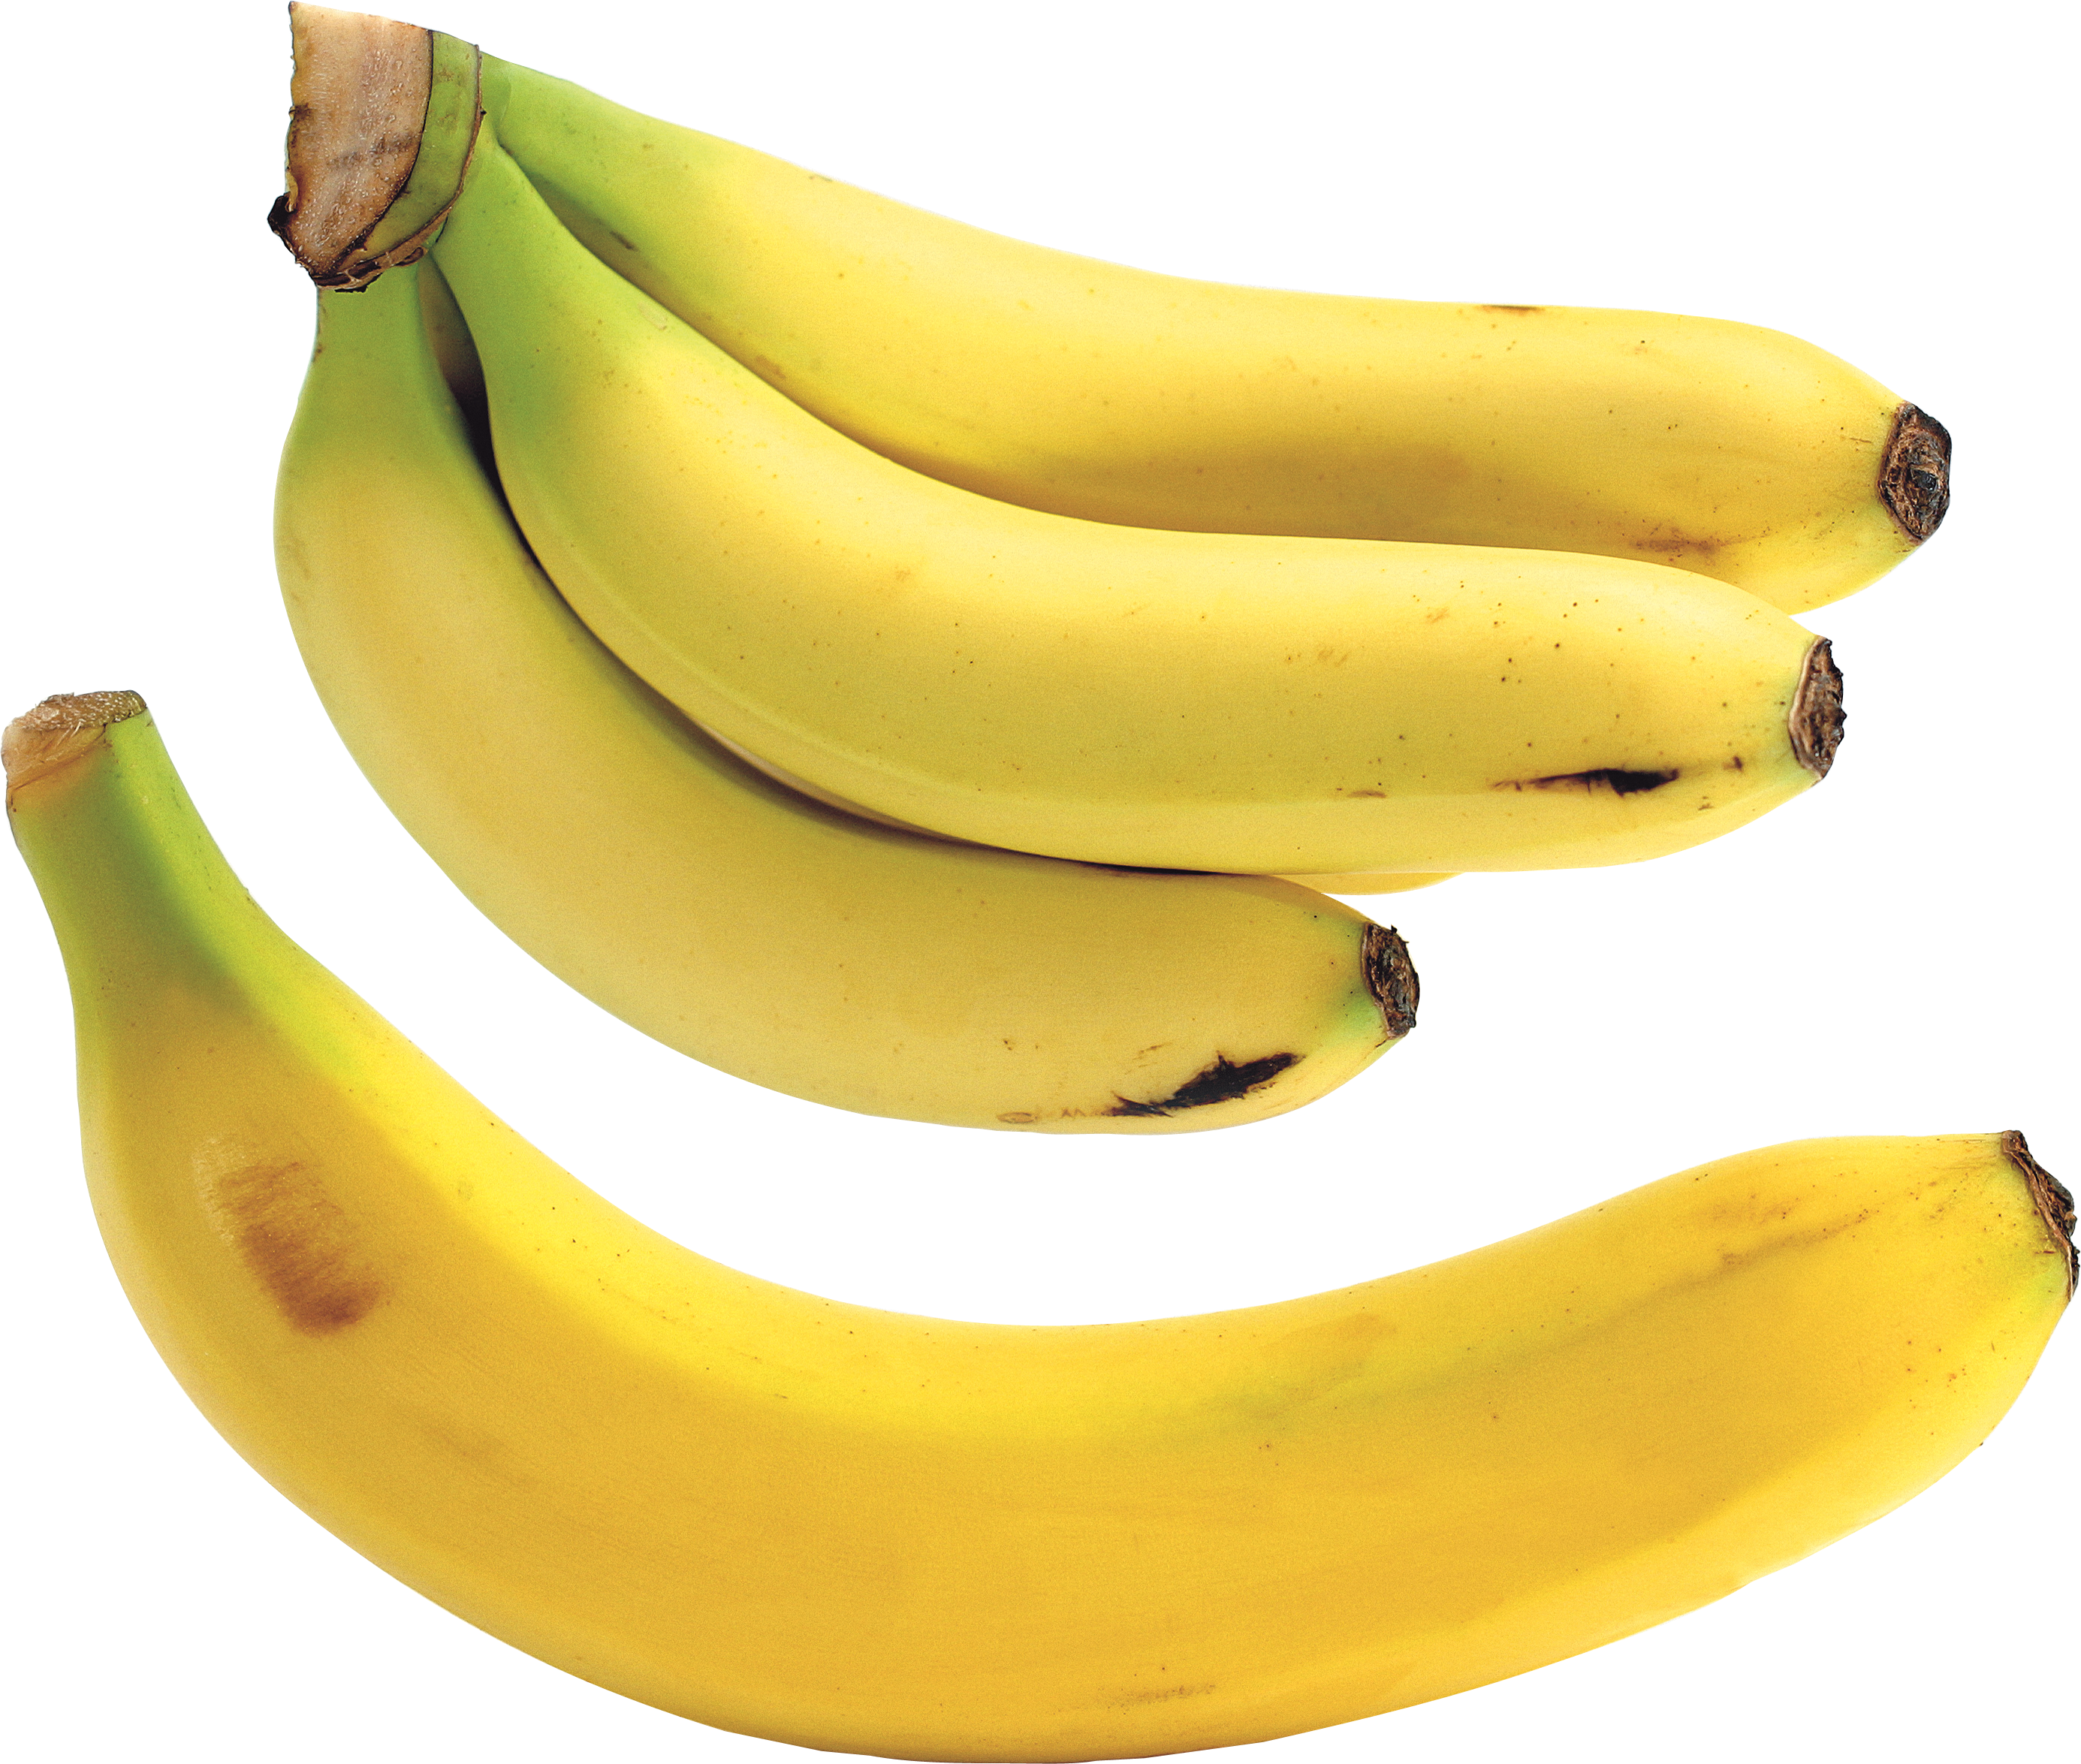 Image banane